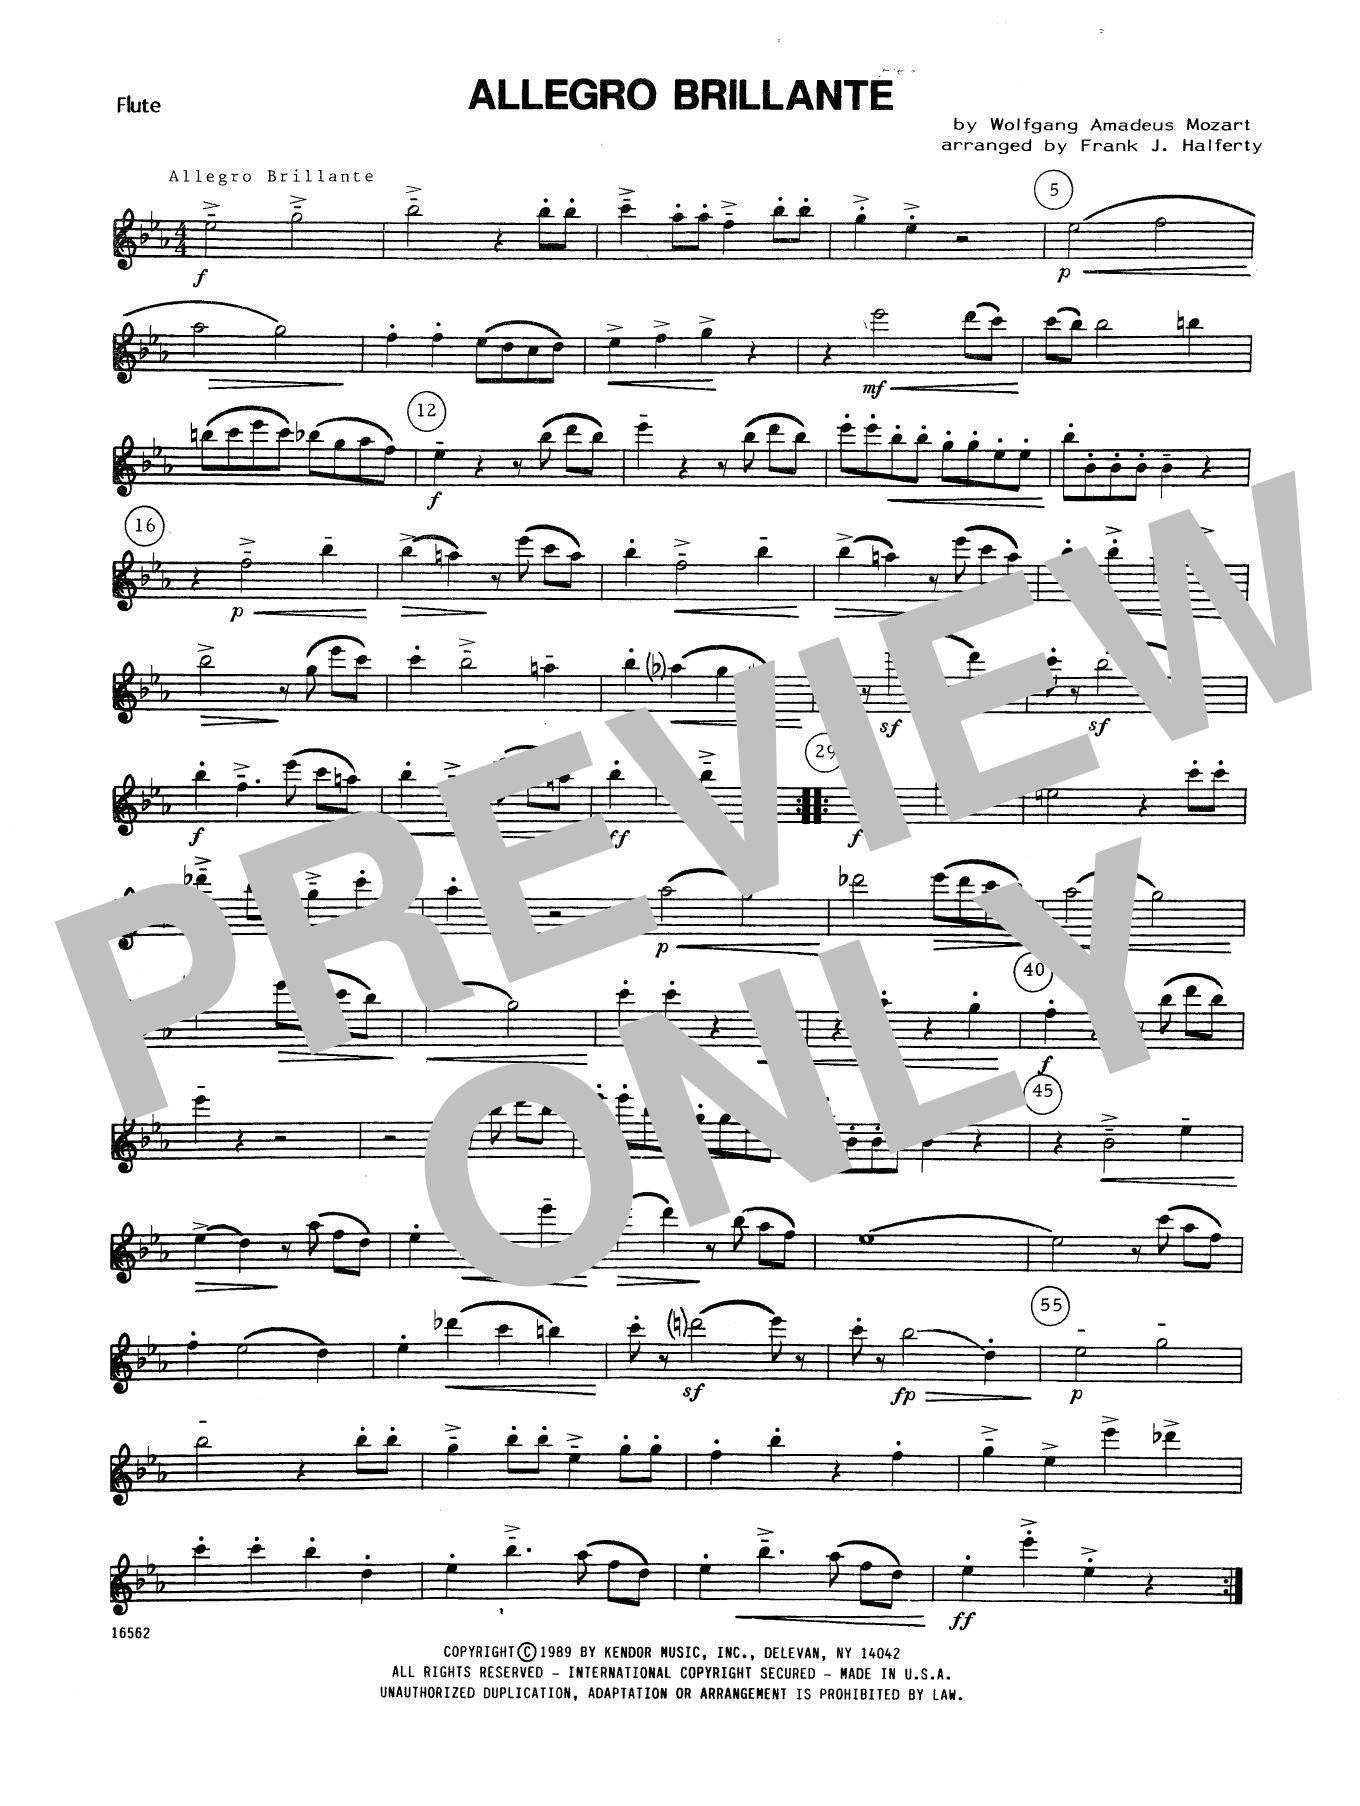 Download Frank J. Halferty Allegro Brillante - Flute Sheet Music